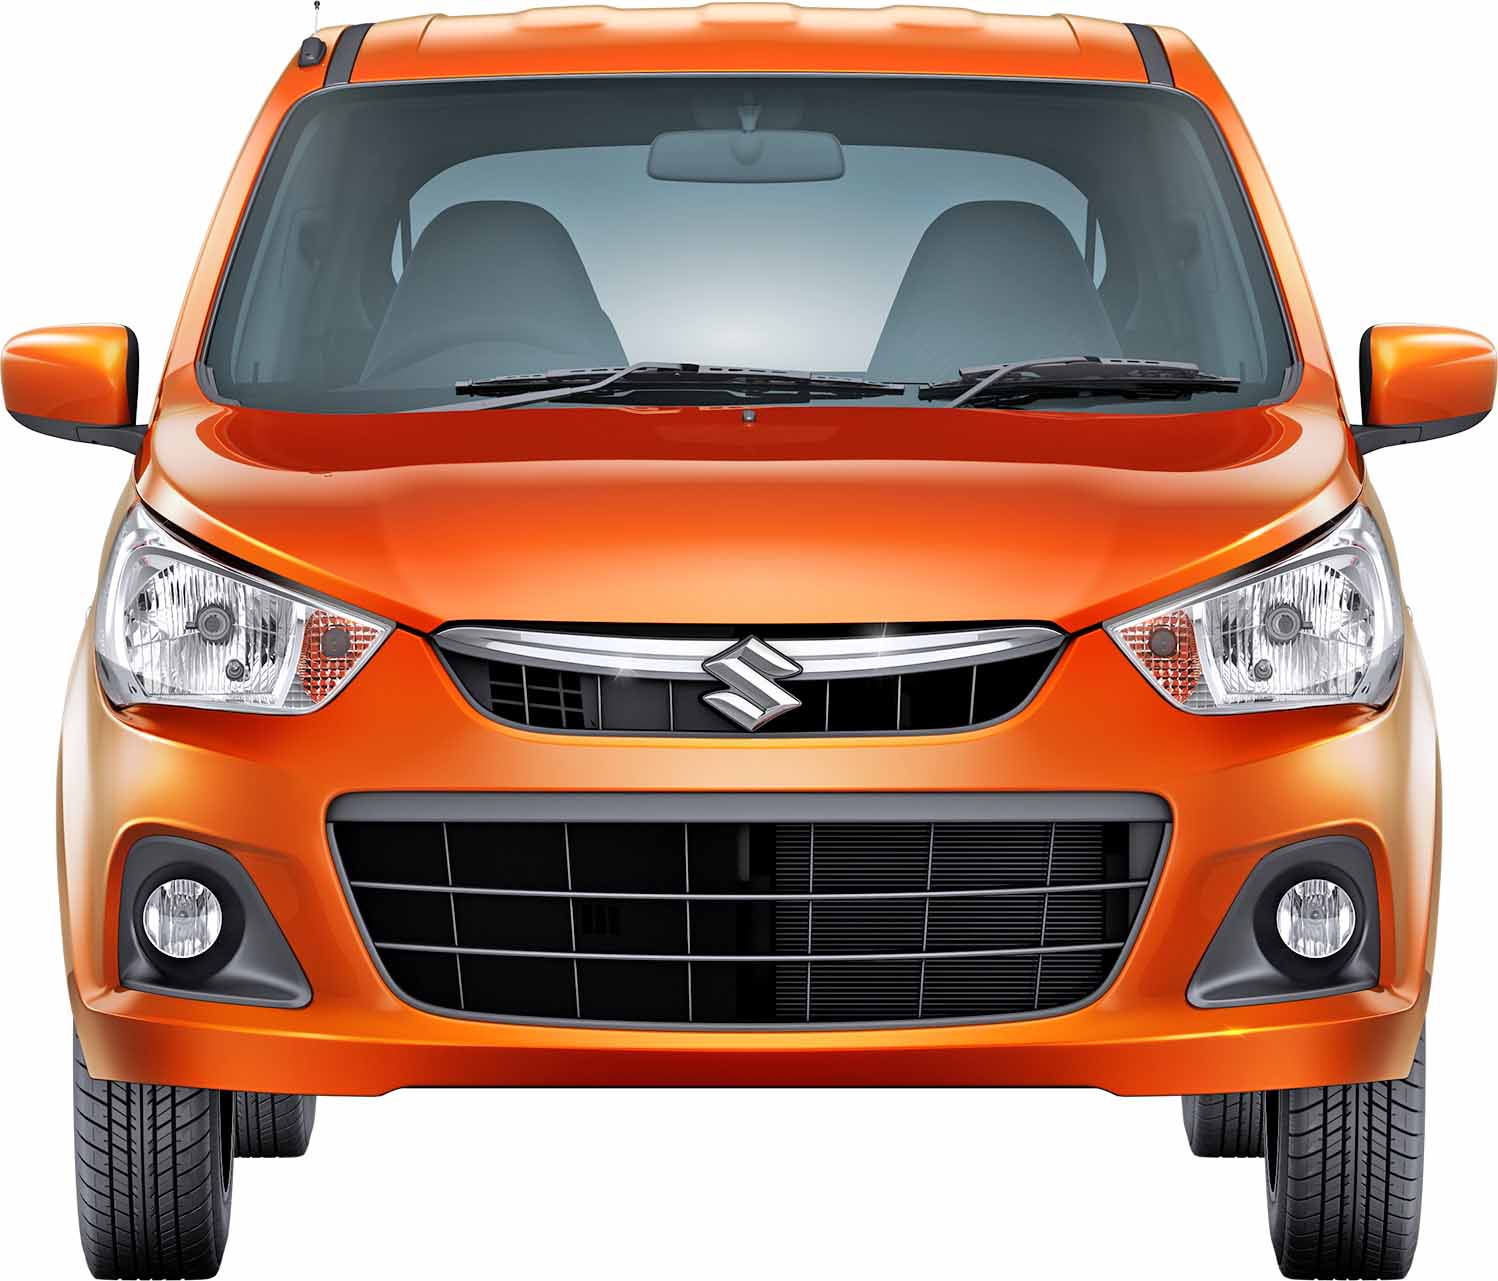 Motoring News: New Maruti Suzuki Alto K10 launched